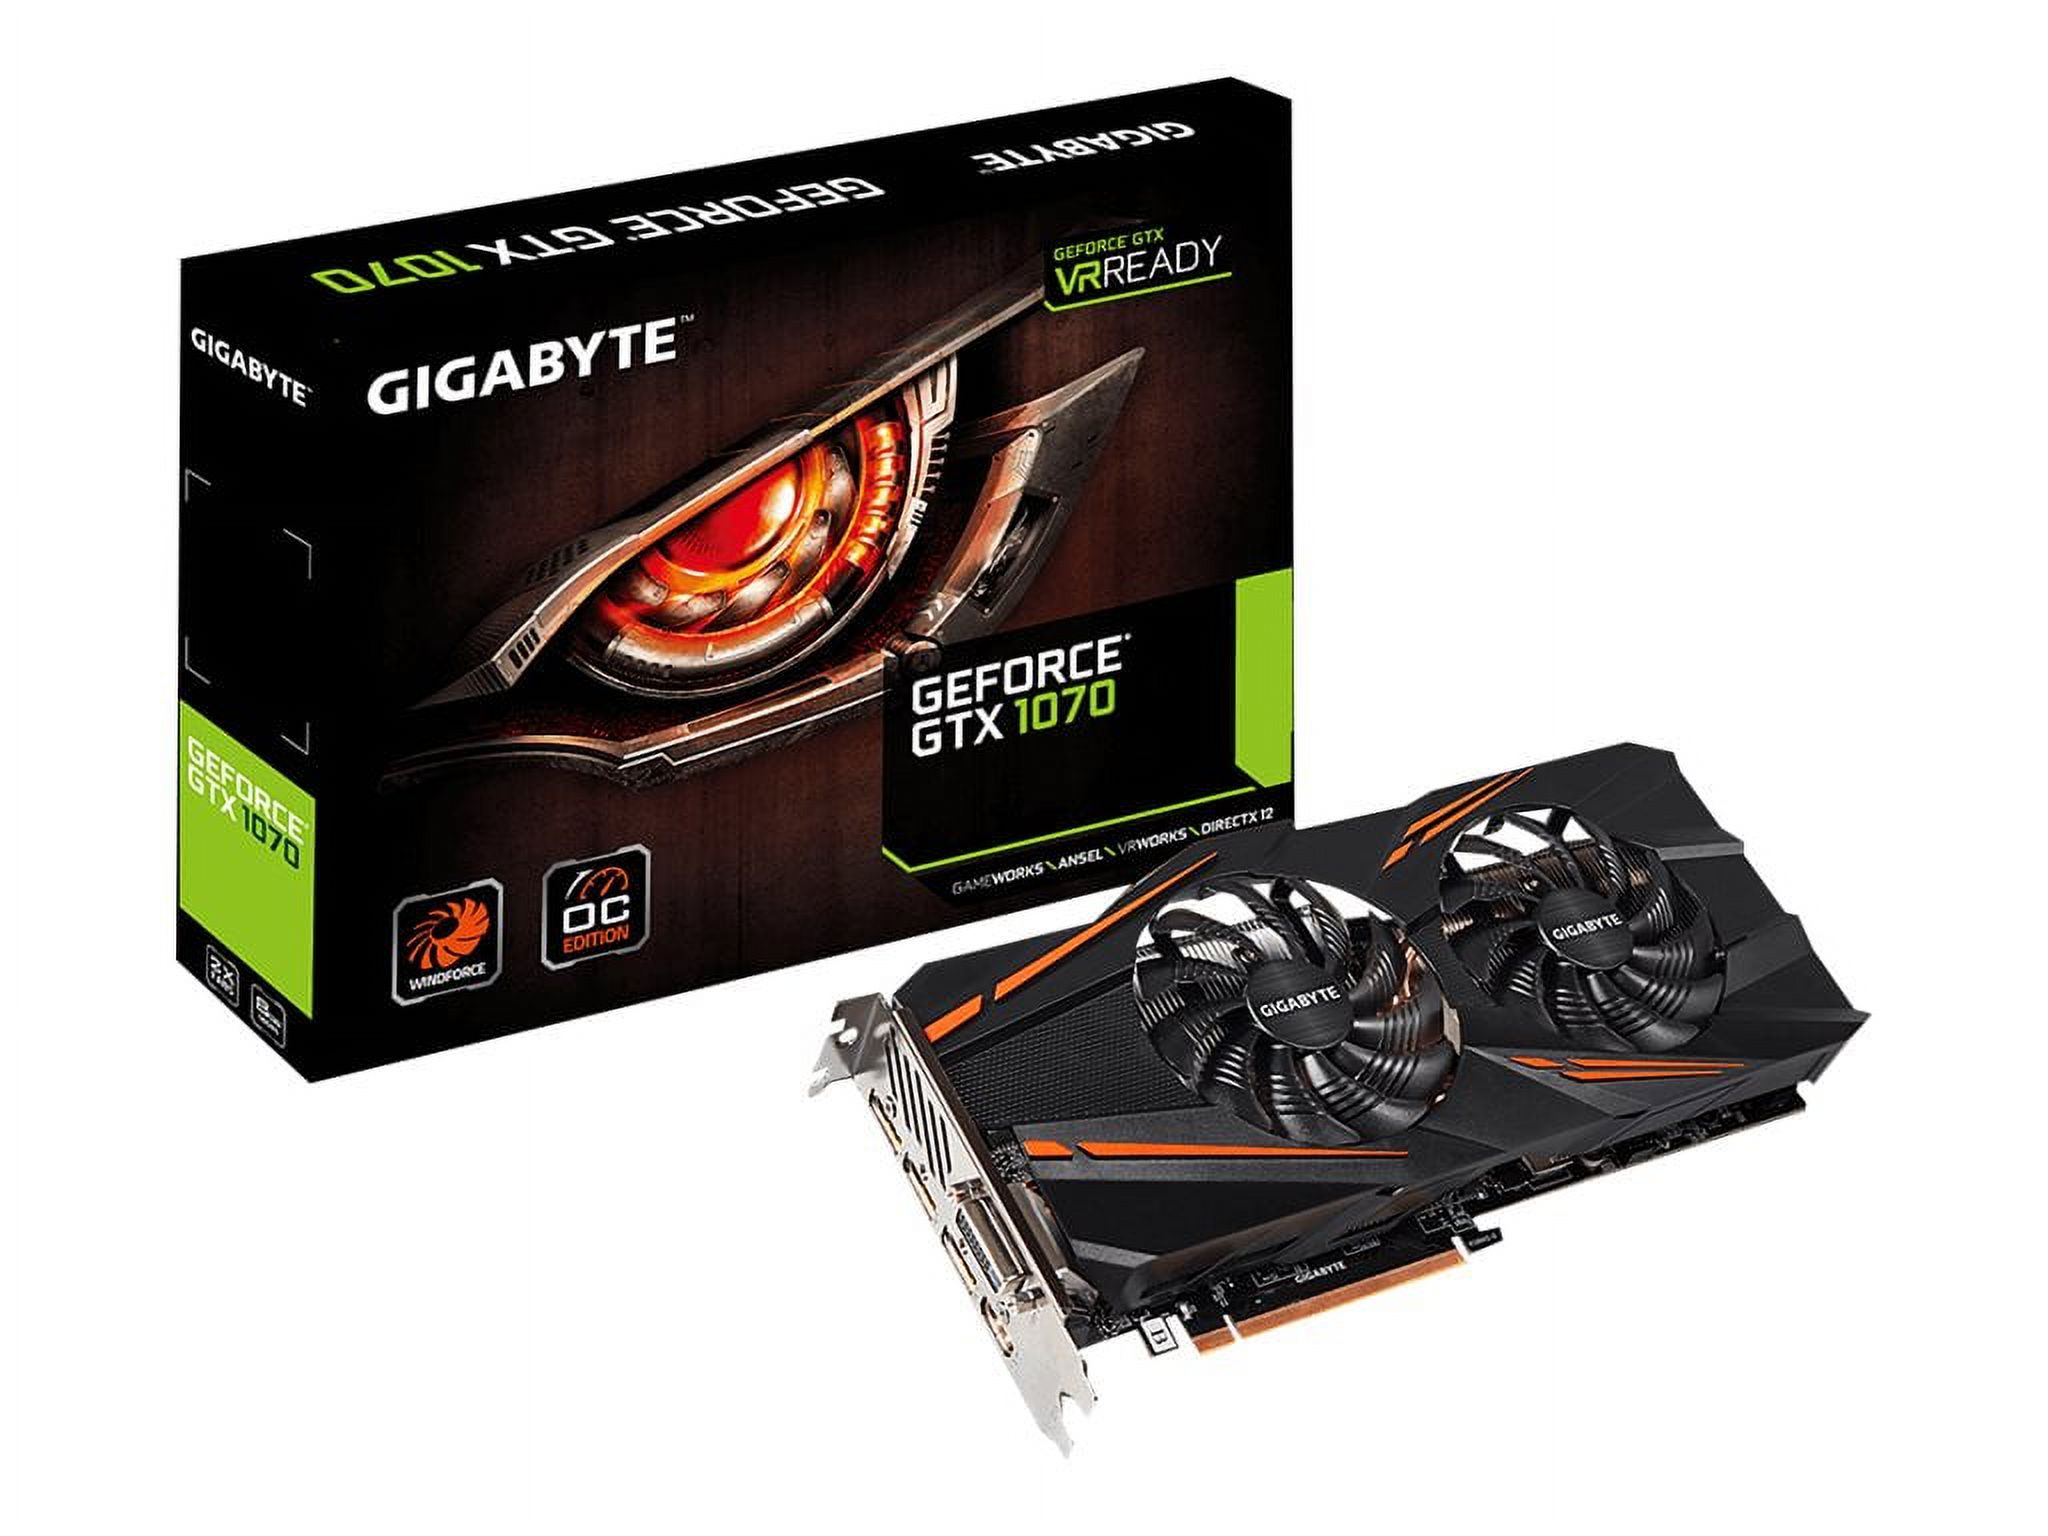 Gigabyte GeForce GTX 1070 WINDFORCE OC - Graphics card - GF GTX 1070 - 8 GB GDDR5 - PCIe 3.0 x16 - DVI, HDMI, 3 x DisplayPort - image 1 of 4